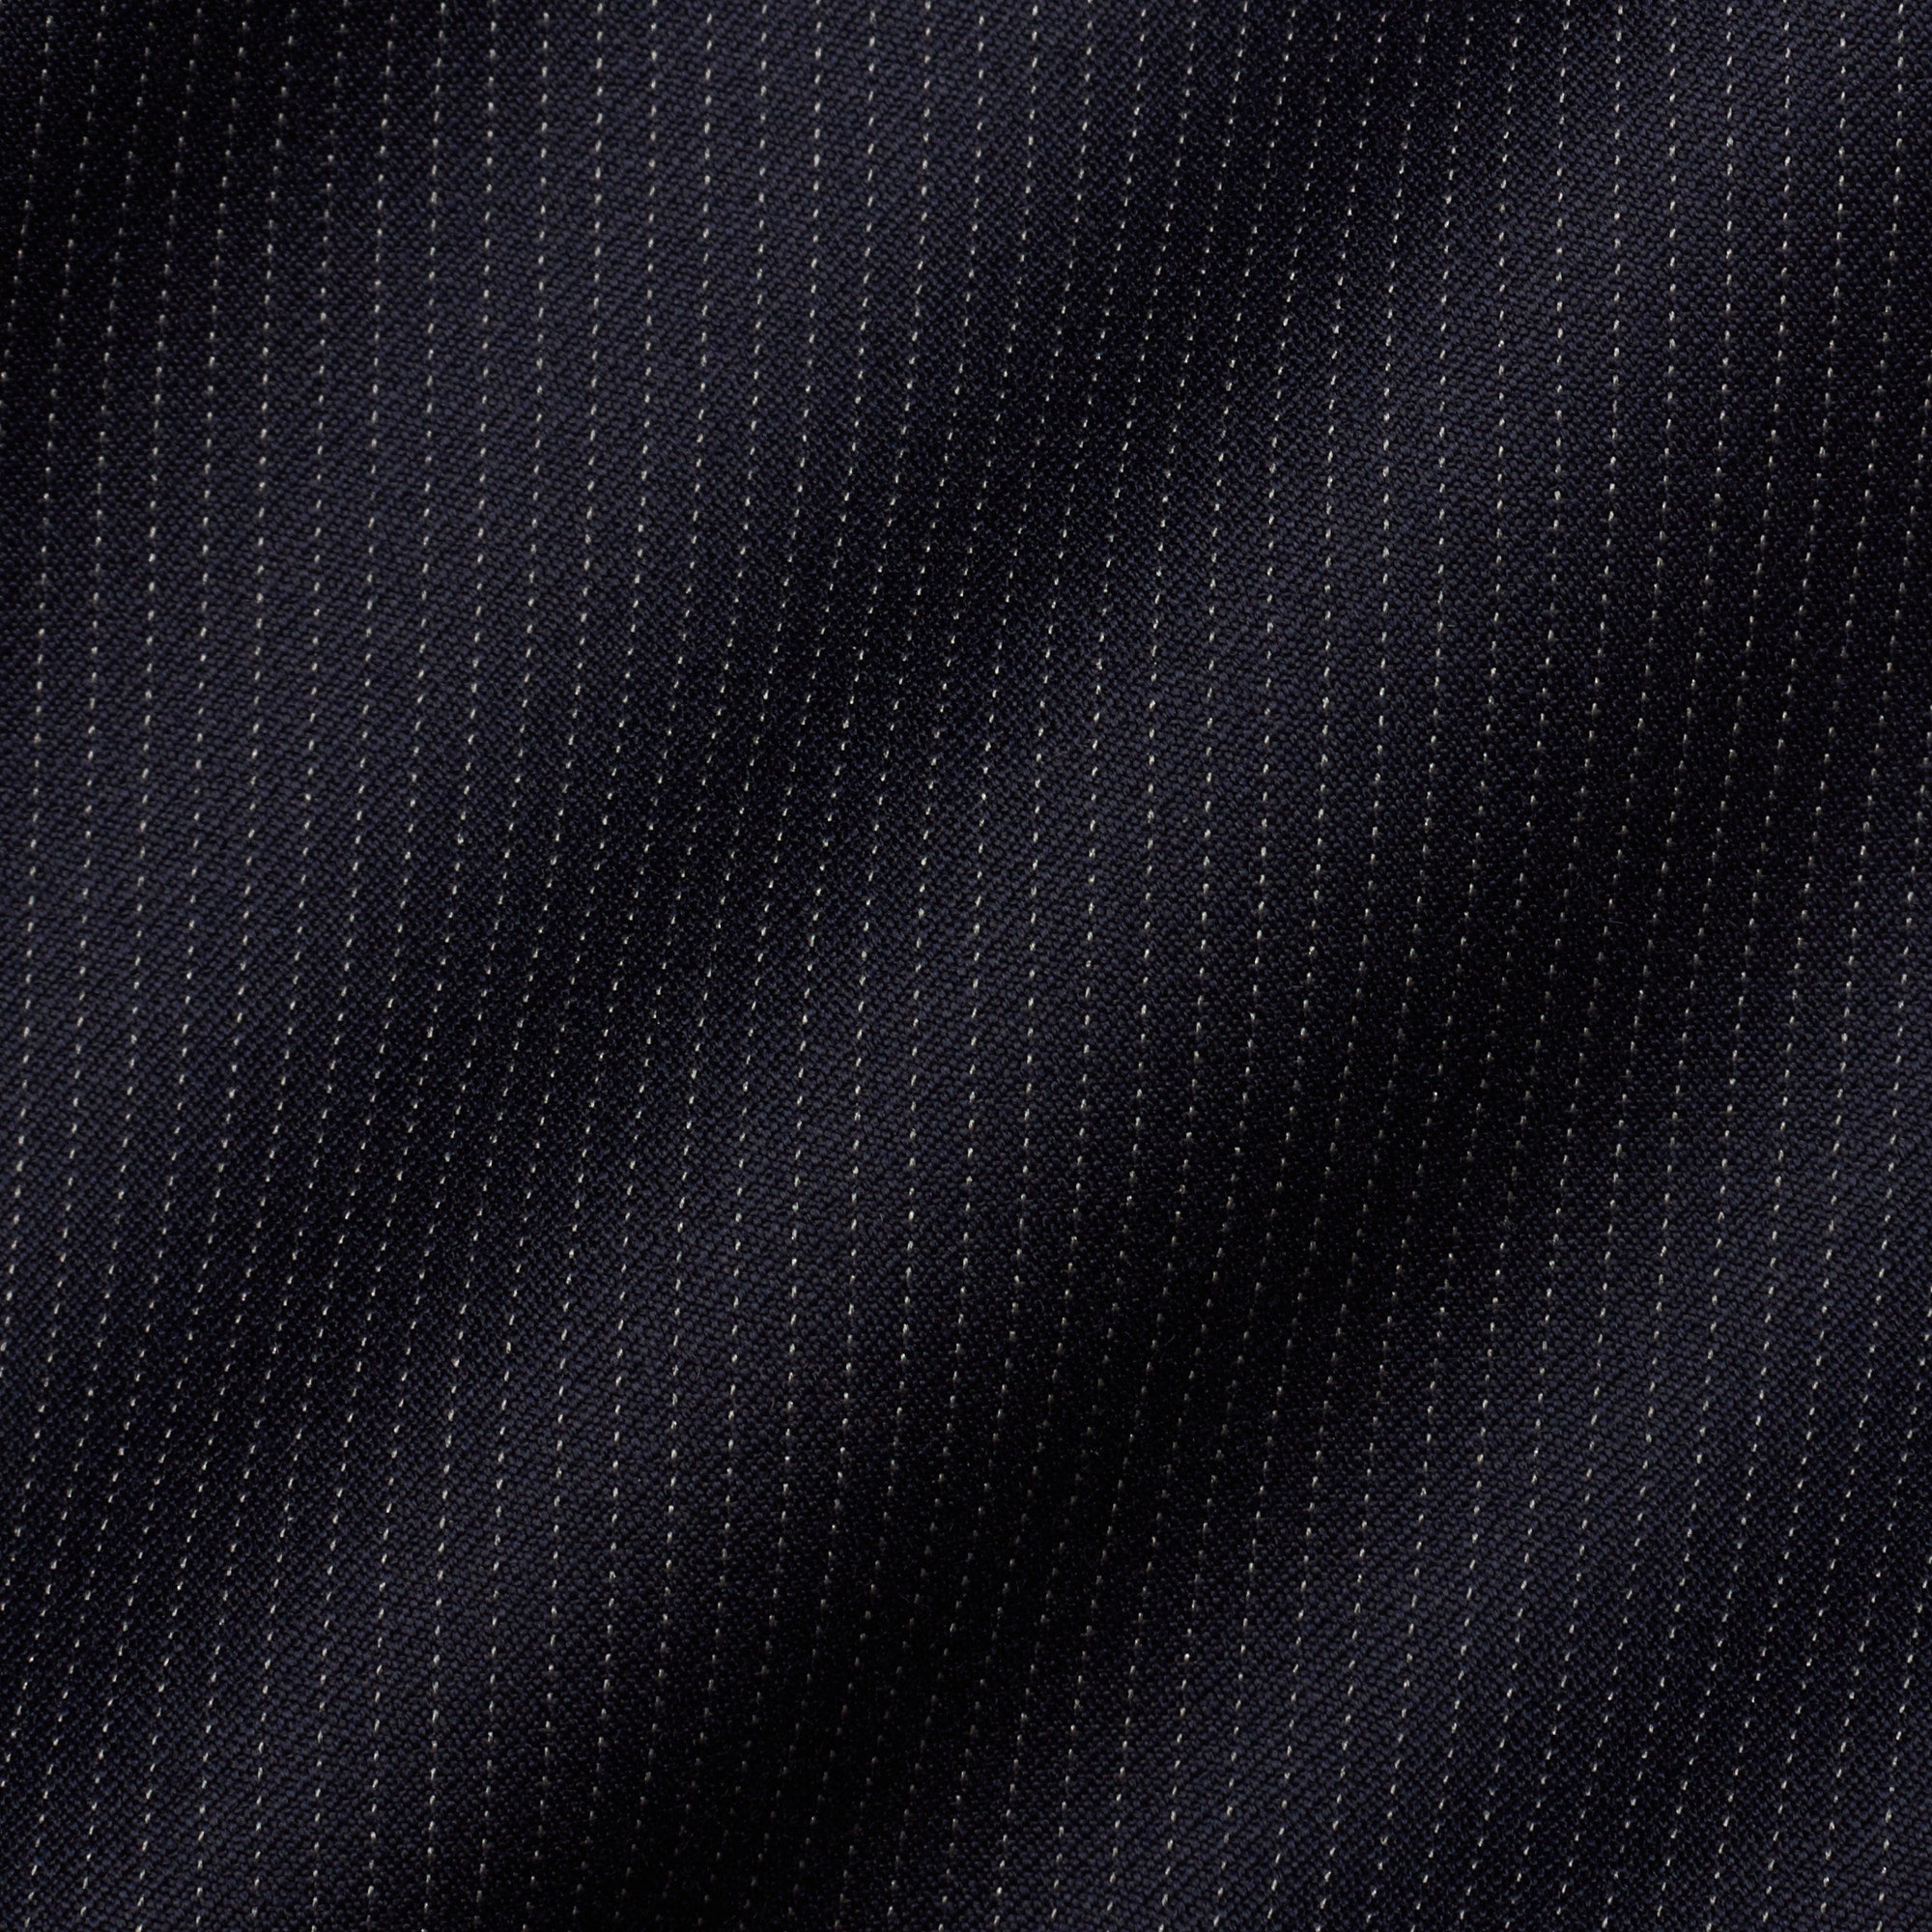 CESARE ATTOLINI Handmade Navy Blue Striped Wool Super 110's Jacket EU 48 US 38 CESARE ATTOLINI